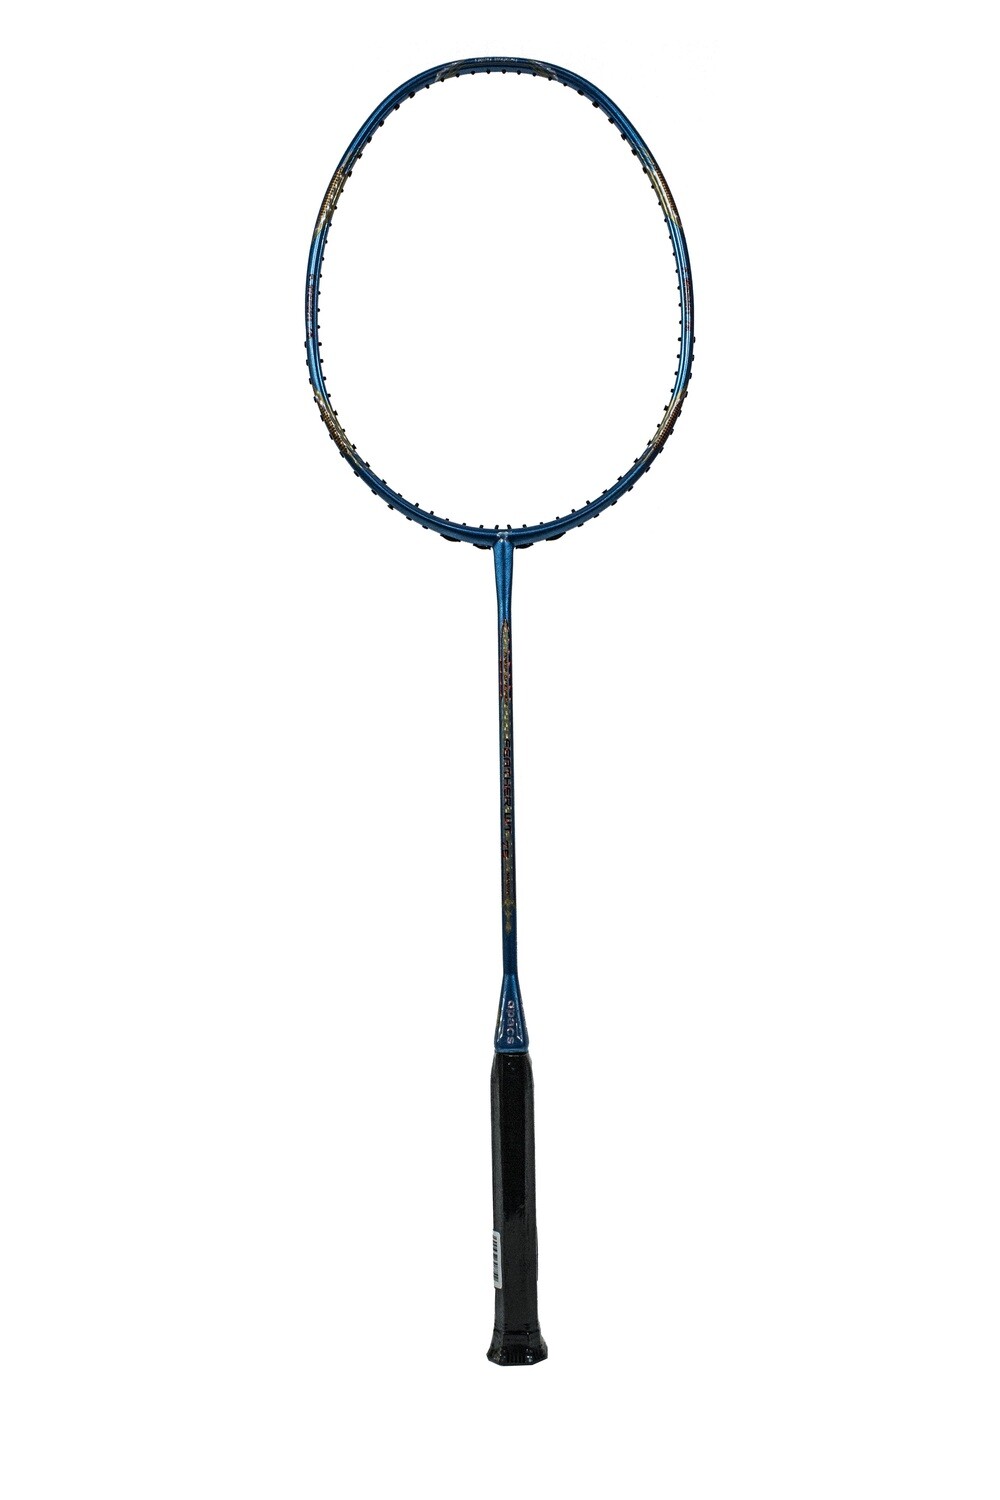 Apacs Feather Weight 75 Blue Badminton Racquet -